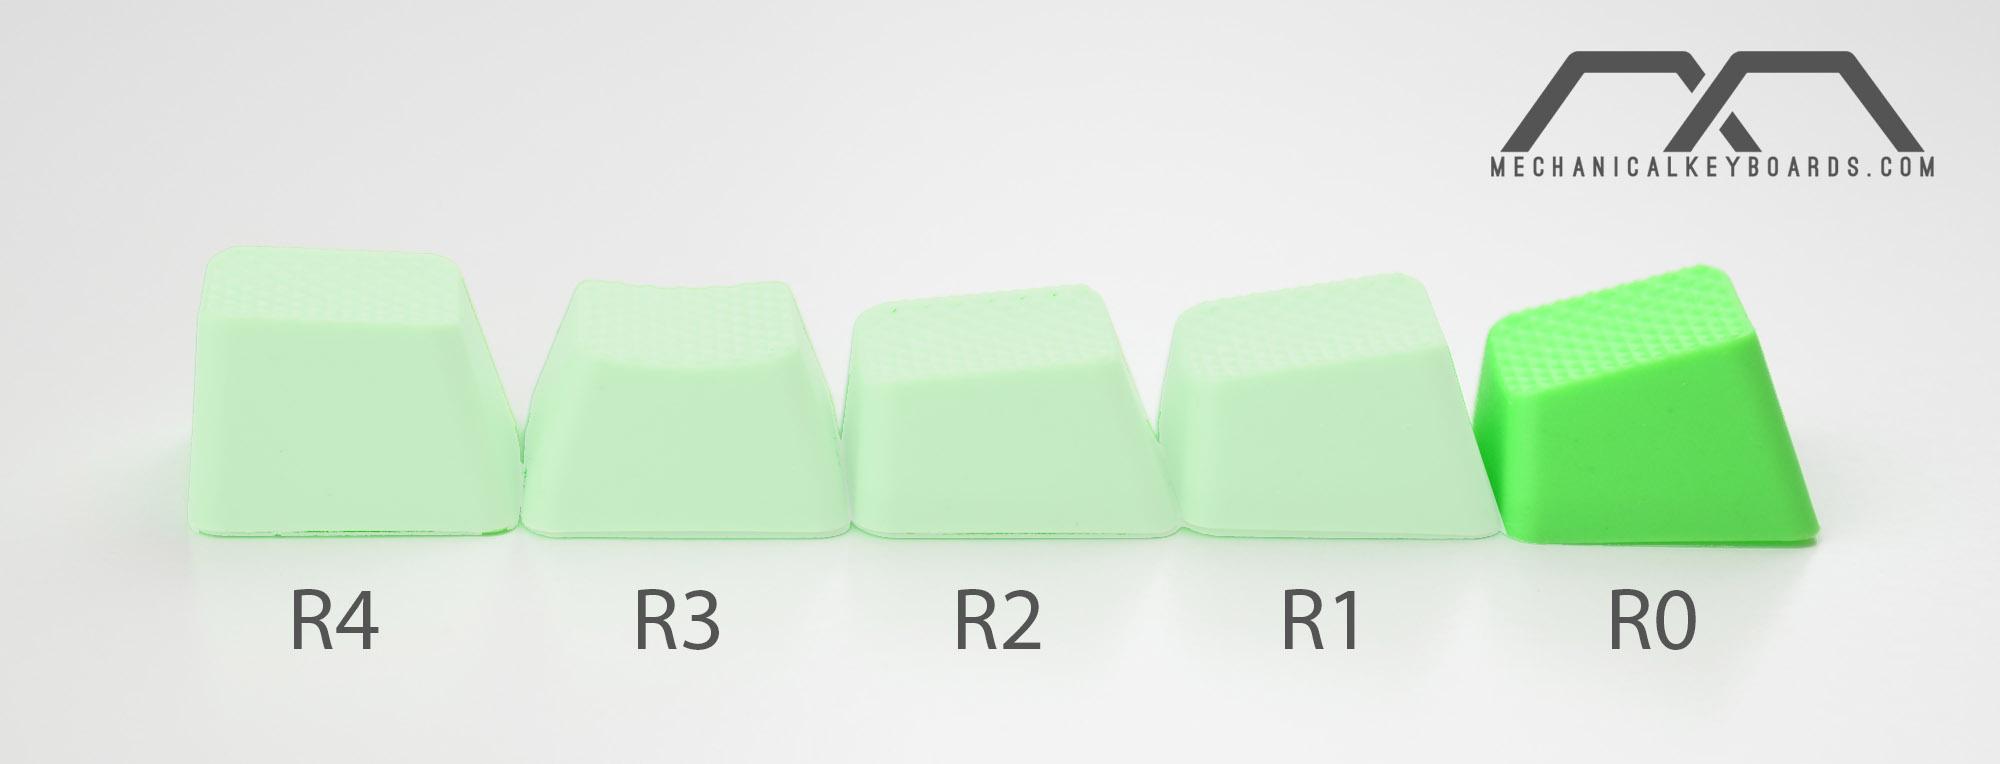 Tai-Hao 4 Key TPR Blank Rubber Keycap Set Neon Green Row 0 MKZPWBEFJ7 |0|